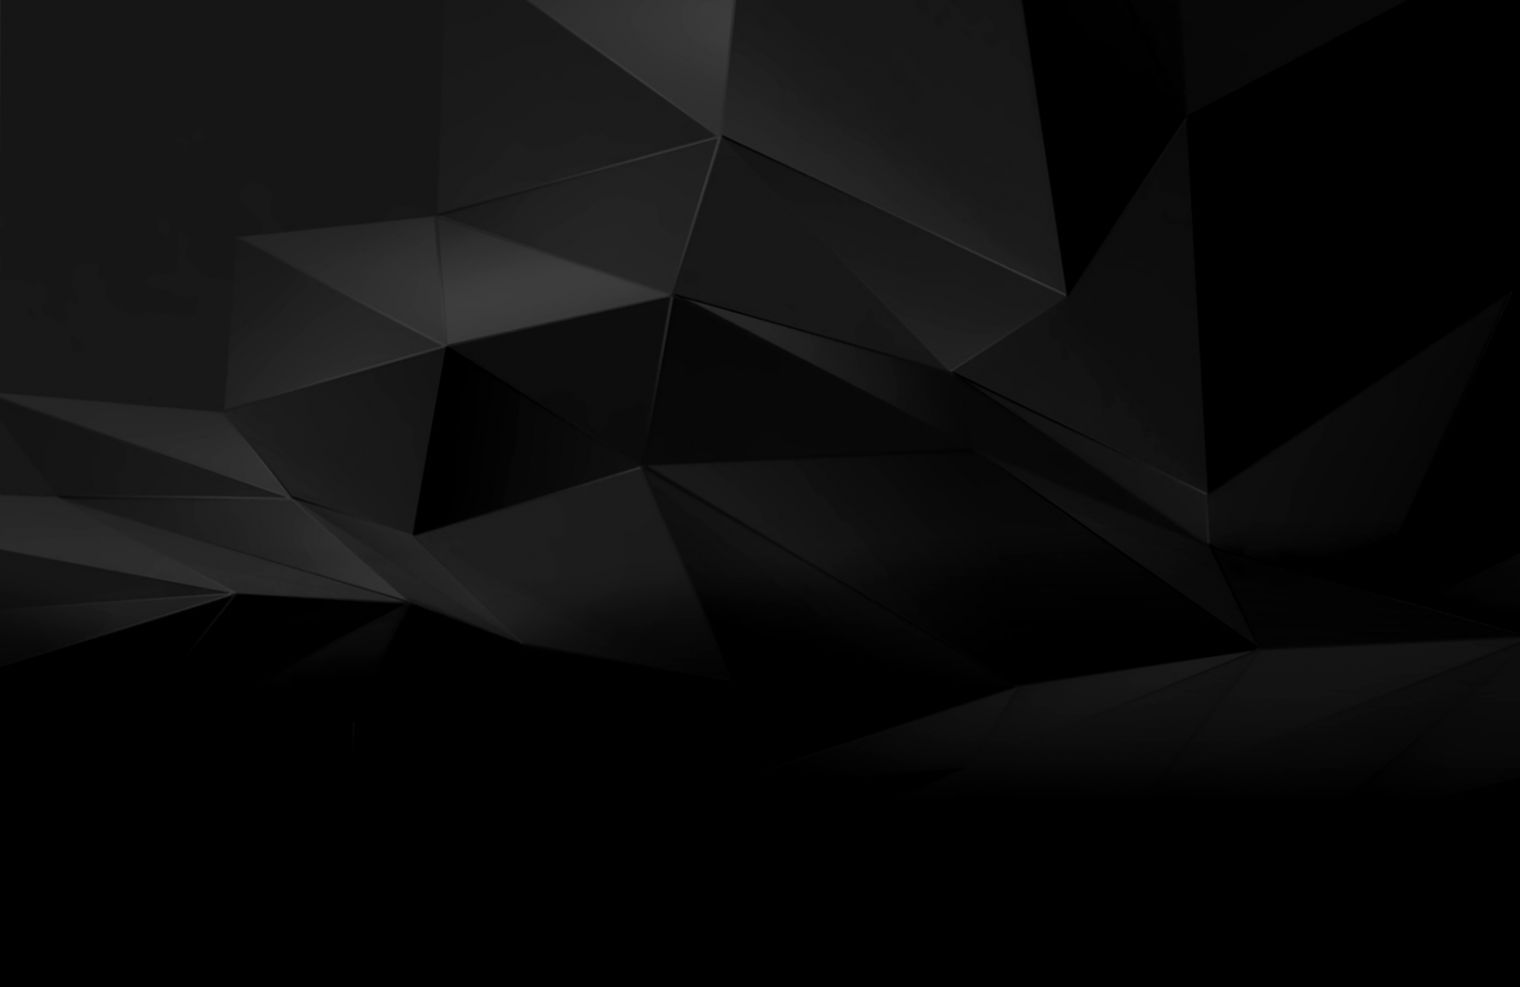 Free download black geometric wallpaper [1520x987] for your Desktop, Mobile & Tablet. Explore Black Geometric Wallpaper. Black Geometric Wallpaper, Black Geometric Wallpaper, Geometric Black and White Wallpaper